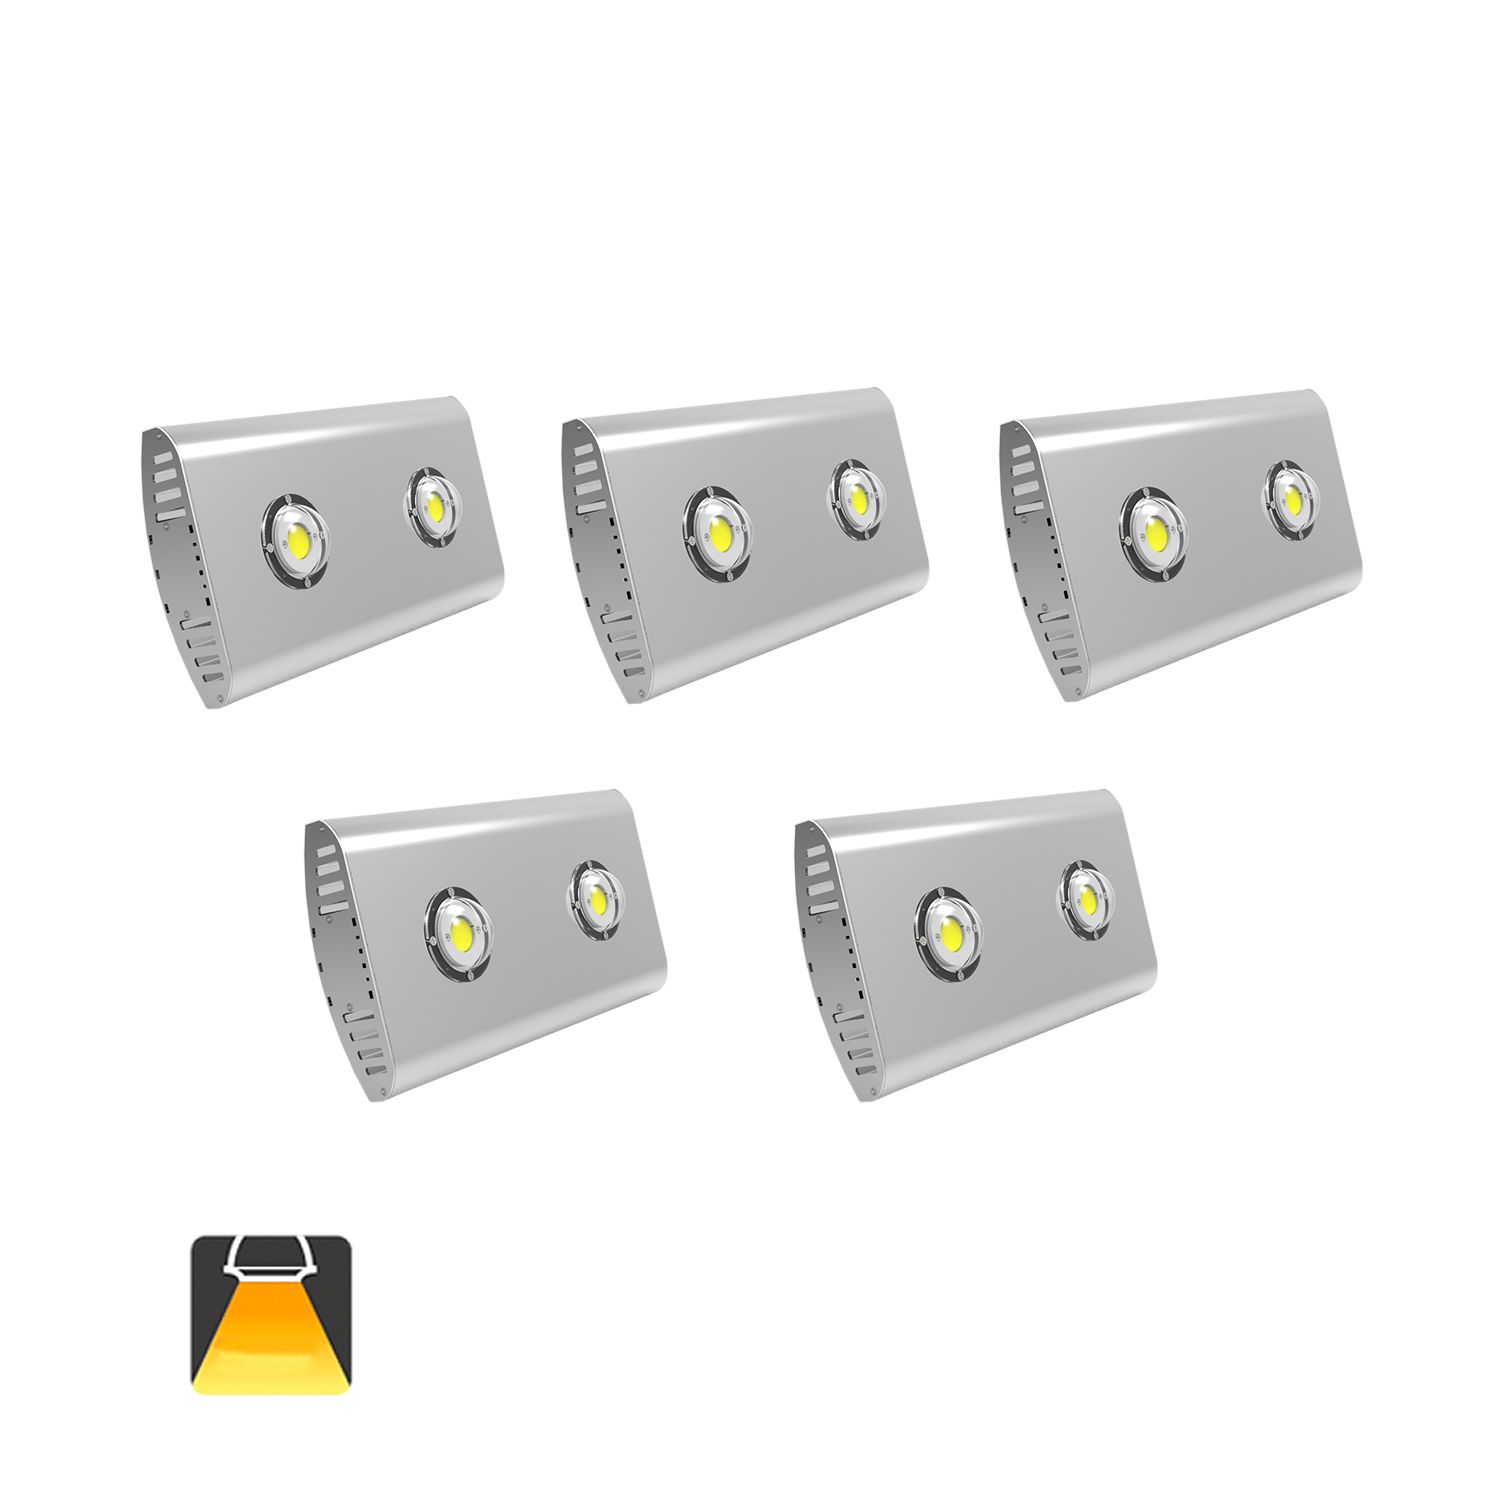 Aigostar - Confezione da 5 Faretto a LED COB, 80W, 7200LM, Impermeabile IP65, Luce Naturale 4000K[Classe di efficienza energetica A+]